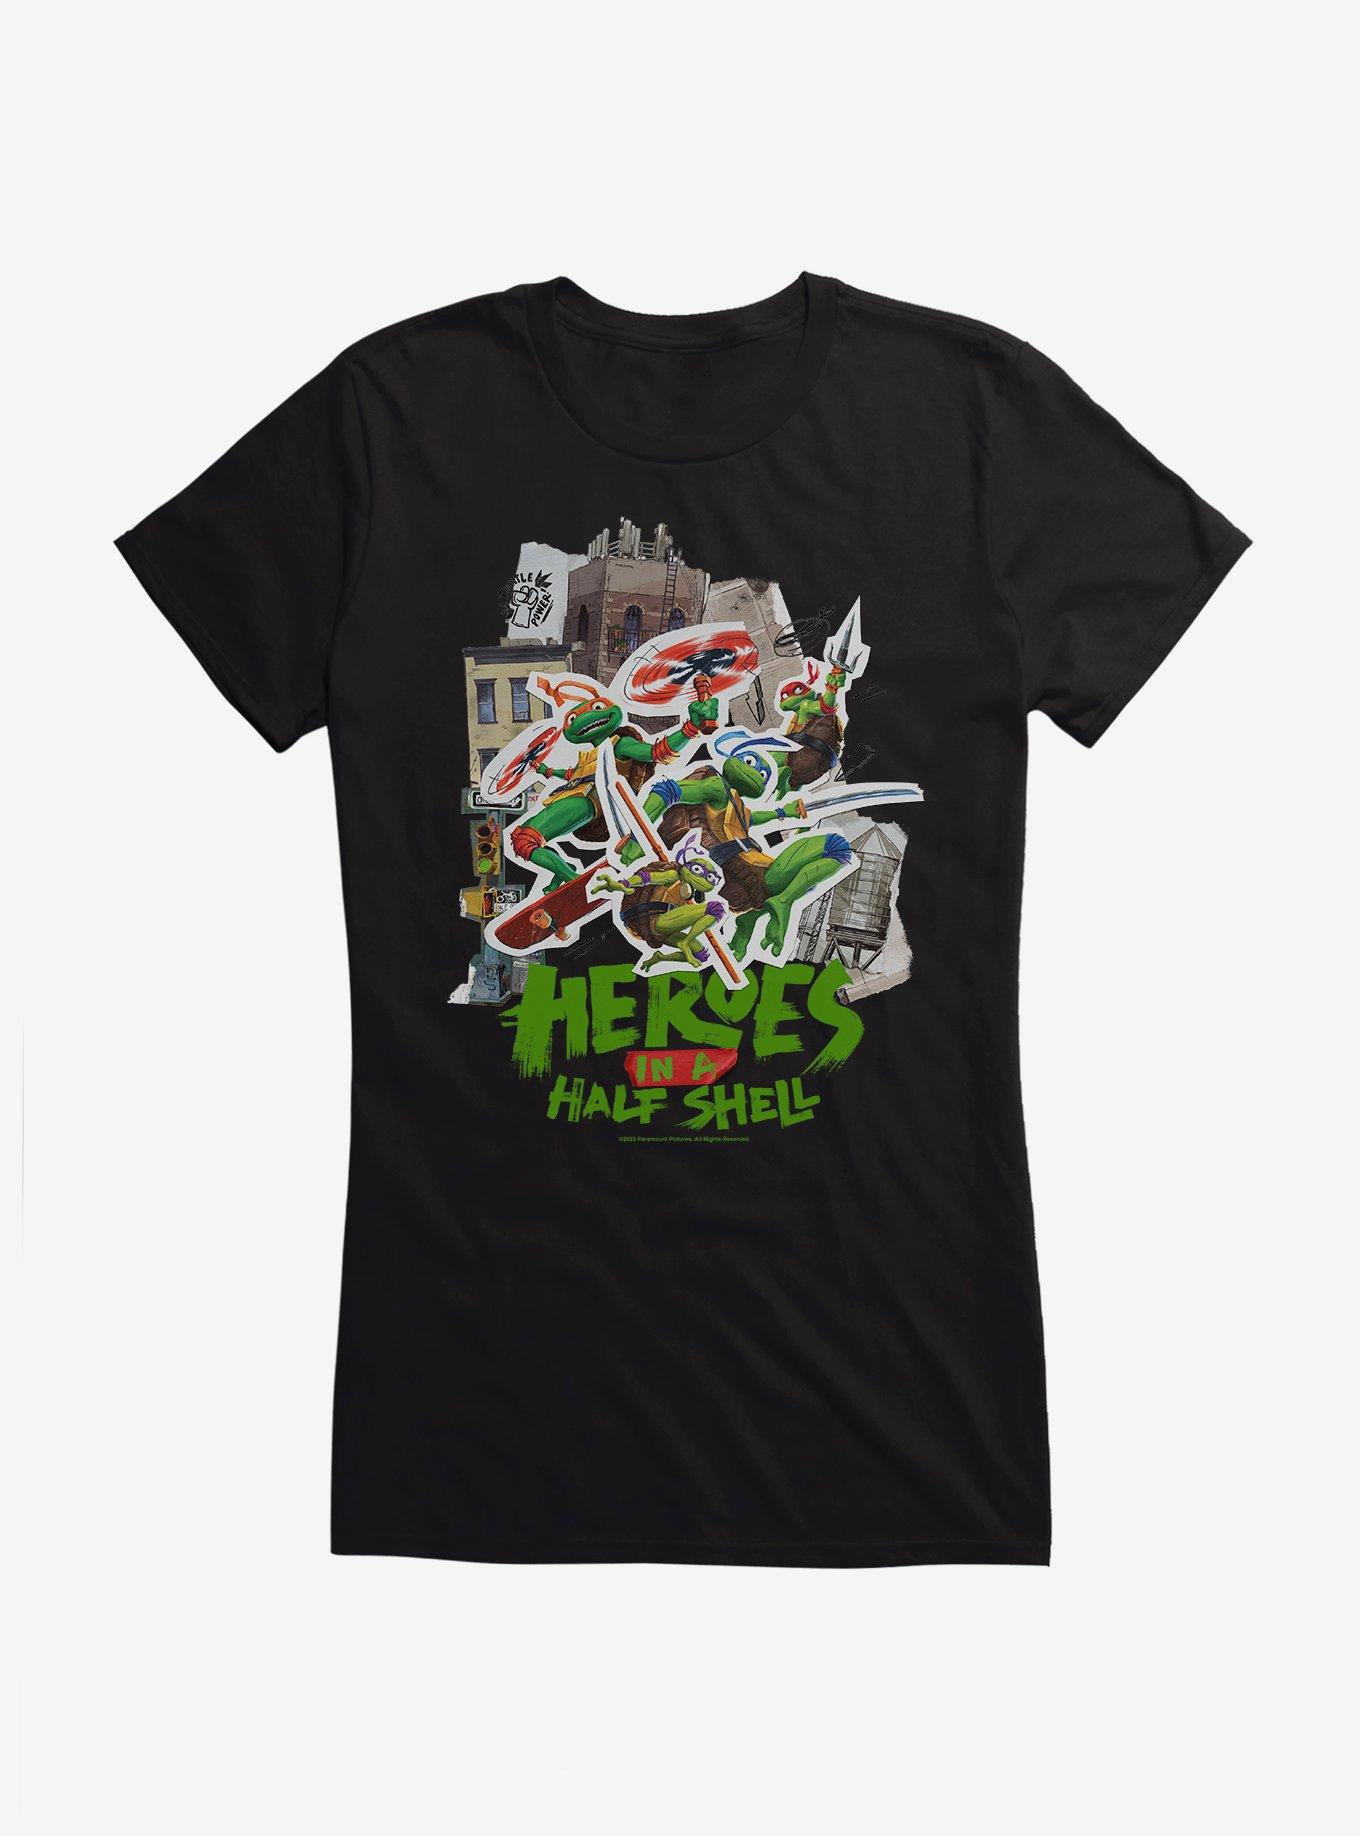 Teenage Mutant Ninja Turtles: Mayhem Heroes A Half Shell Girls T-Shirt